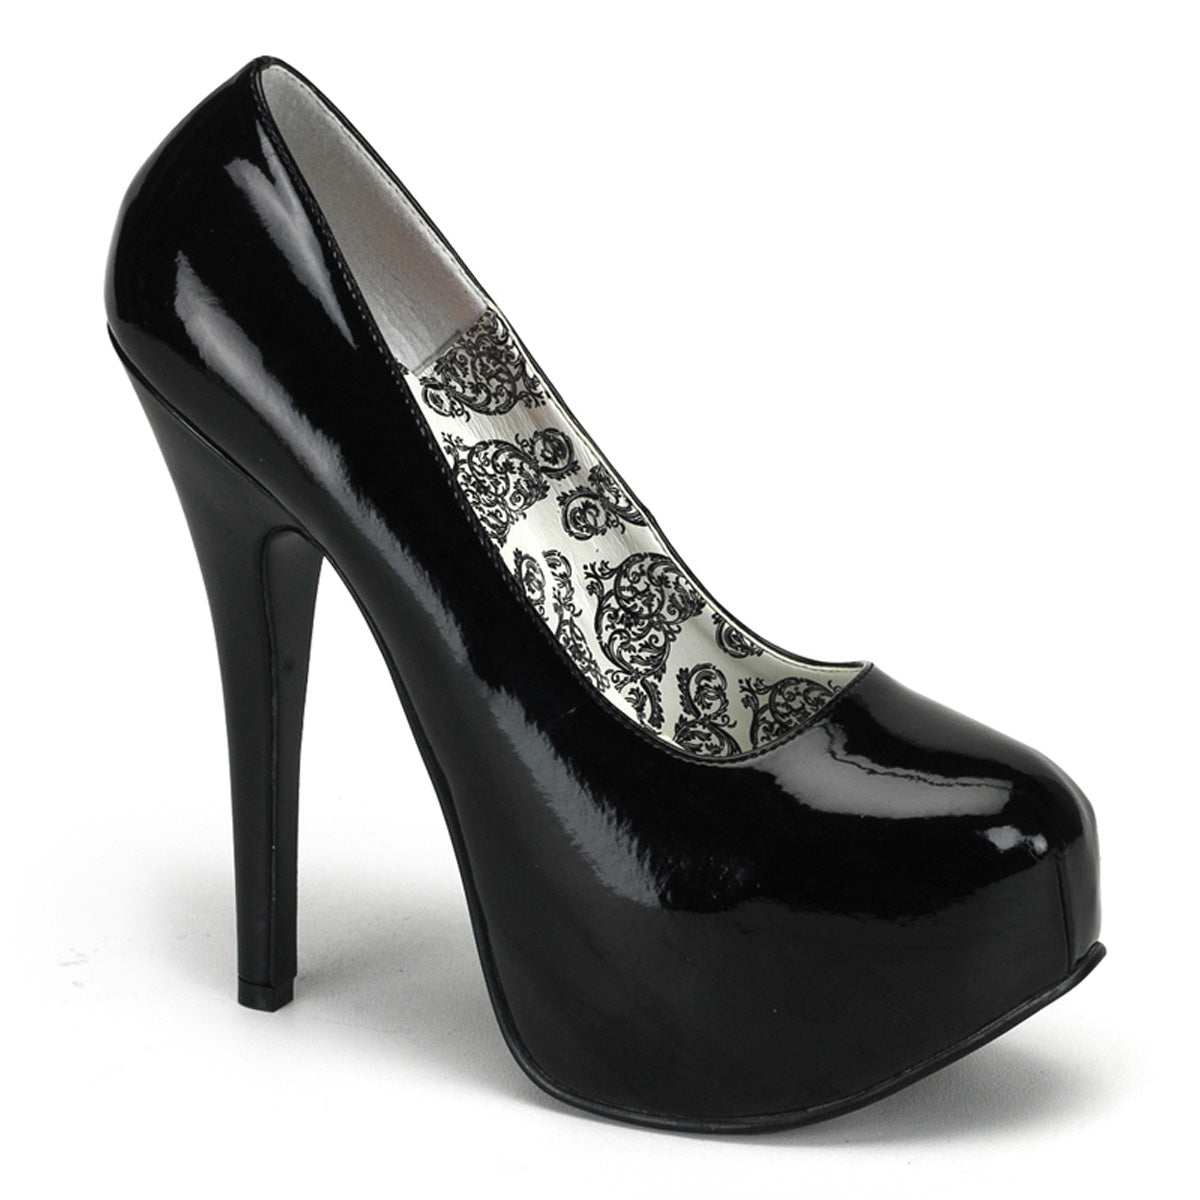 TEEZE-06W Large Size Ladies Shoes 6 Inch Heel Black Patent Platform Shoes